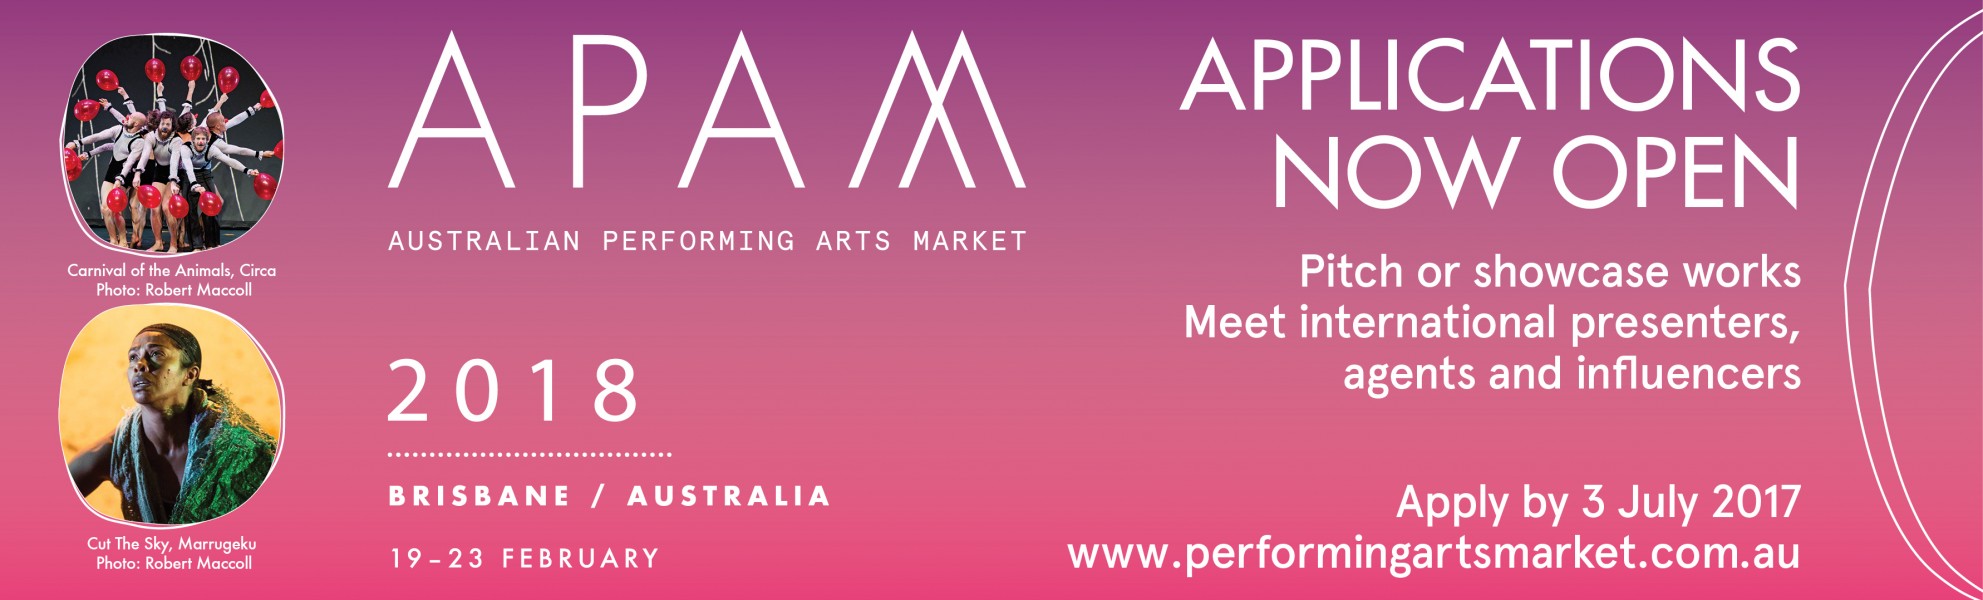 Australian Performing Arts Market seeks artist applications